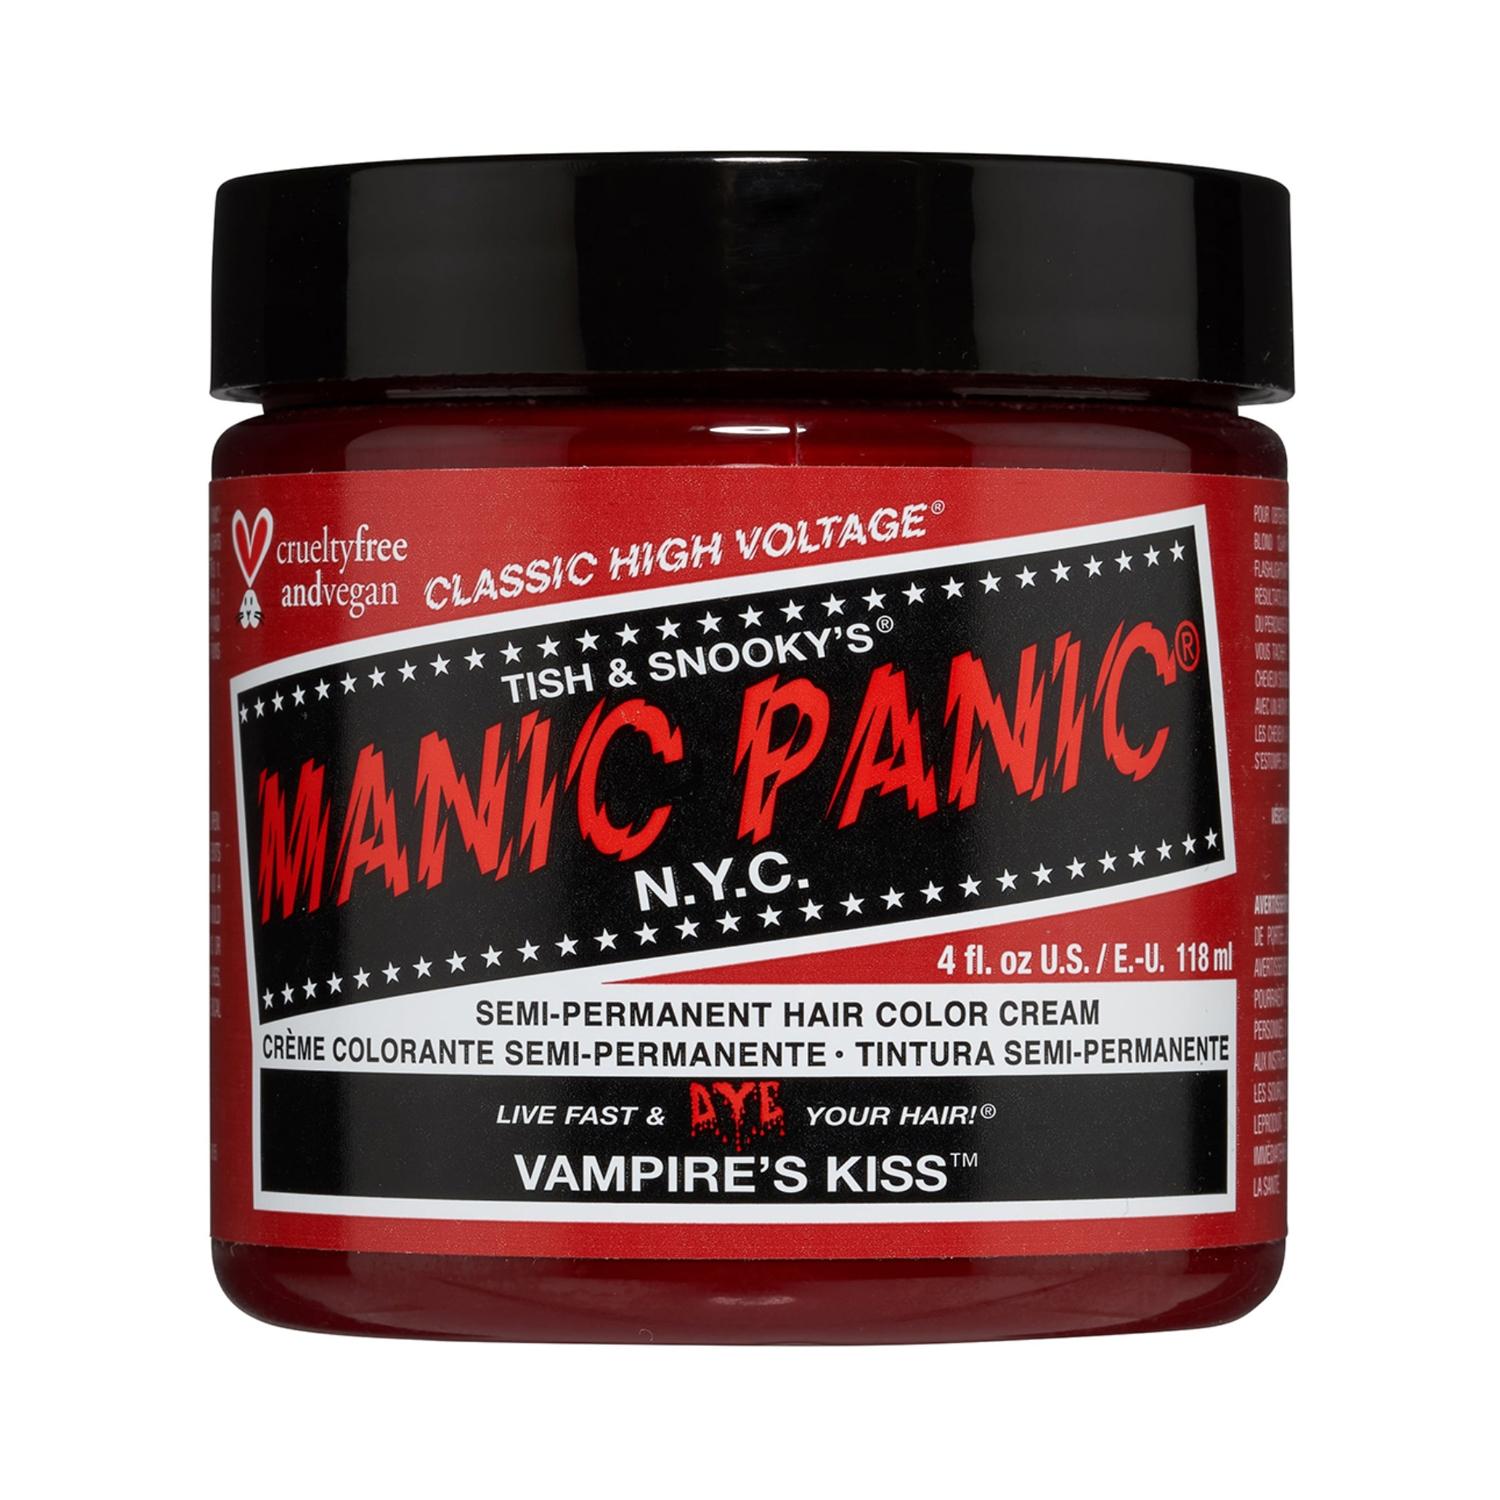 manic panic classic high voltage semi permanent hair color cream - vampire's kiss (118ml)